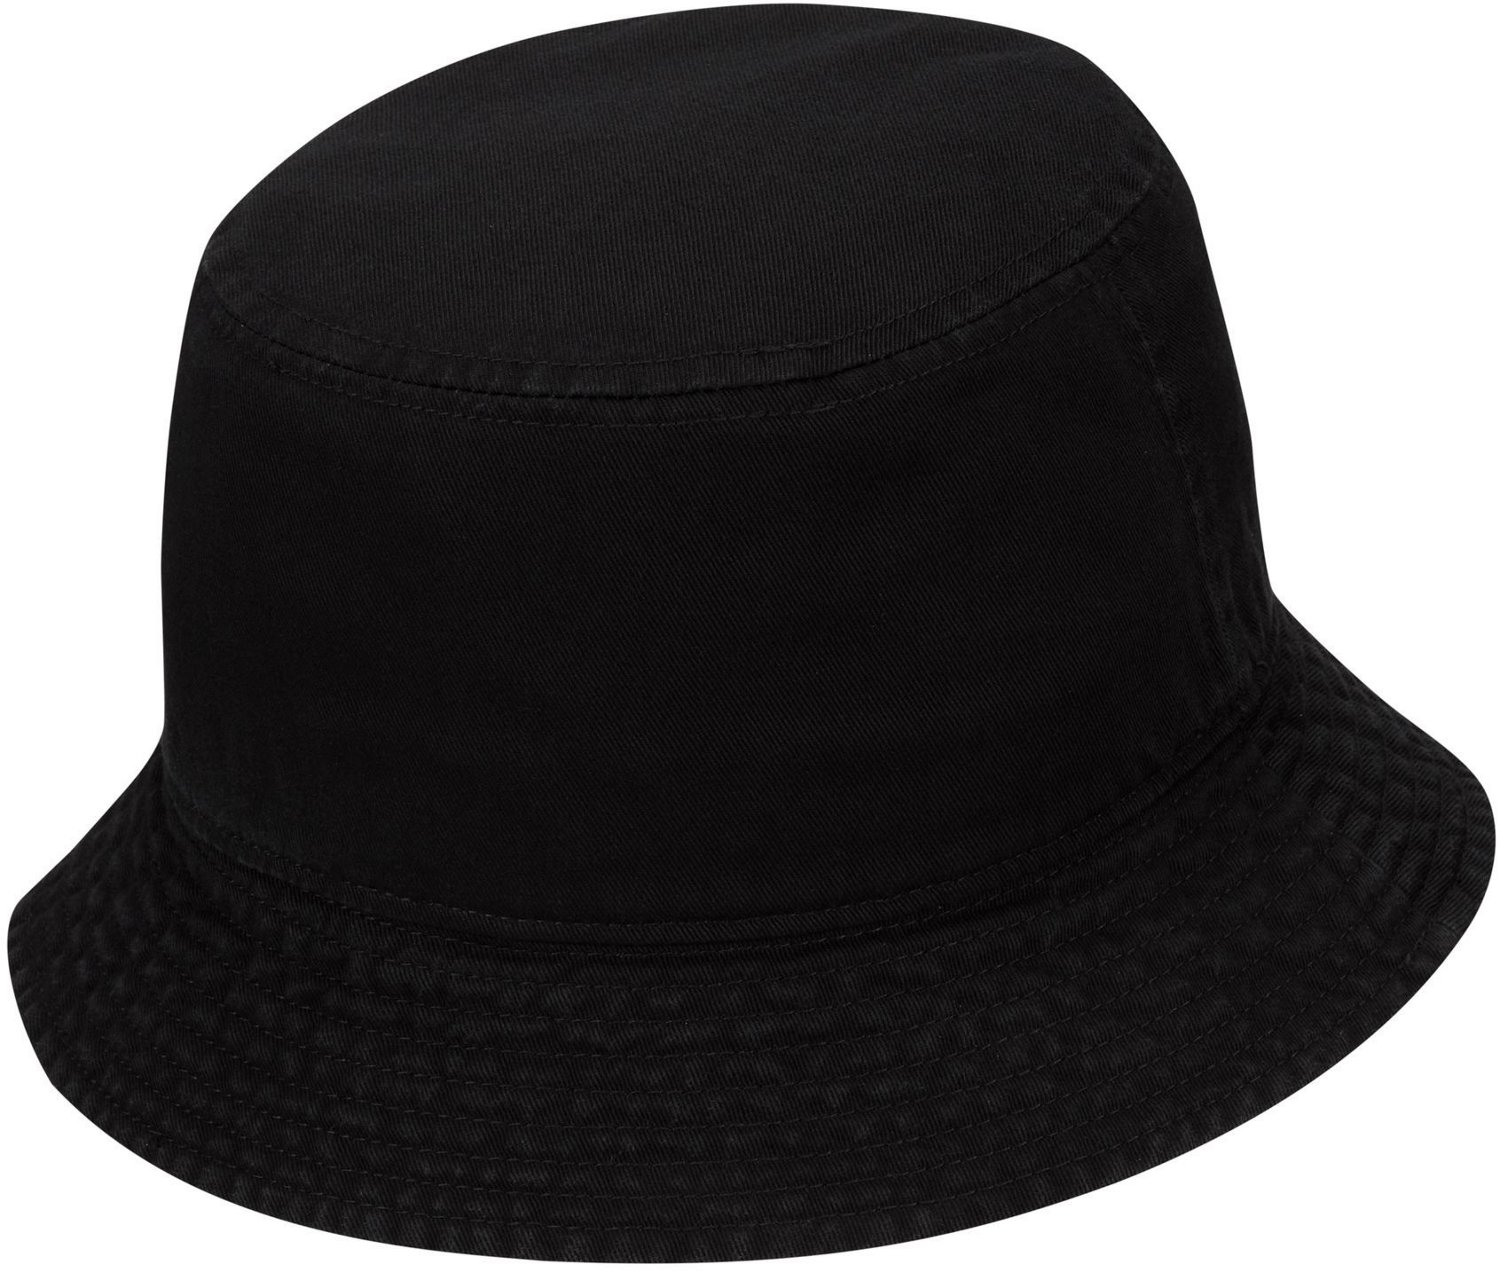 Nike Men's Apex Futura Bucket Hat | Free Shipping at Academy